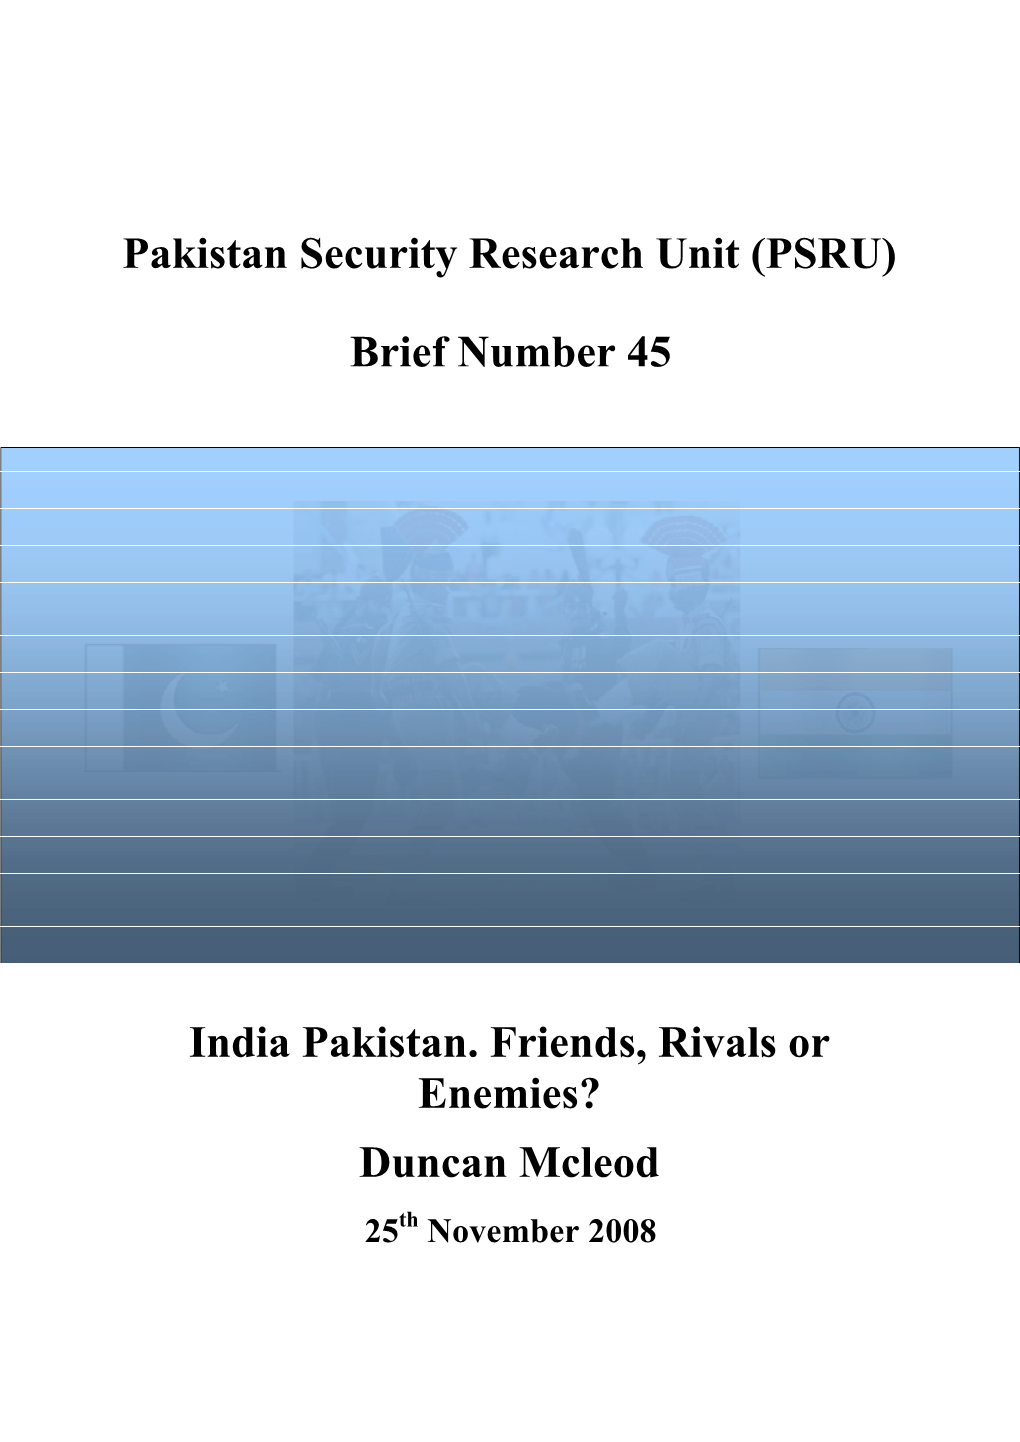 (PSRU) Brief Number 45 India Pakistan. Friends, Rivals Or Enemies?